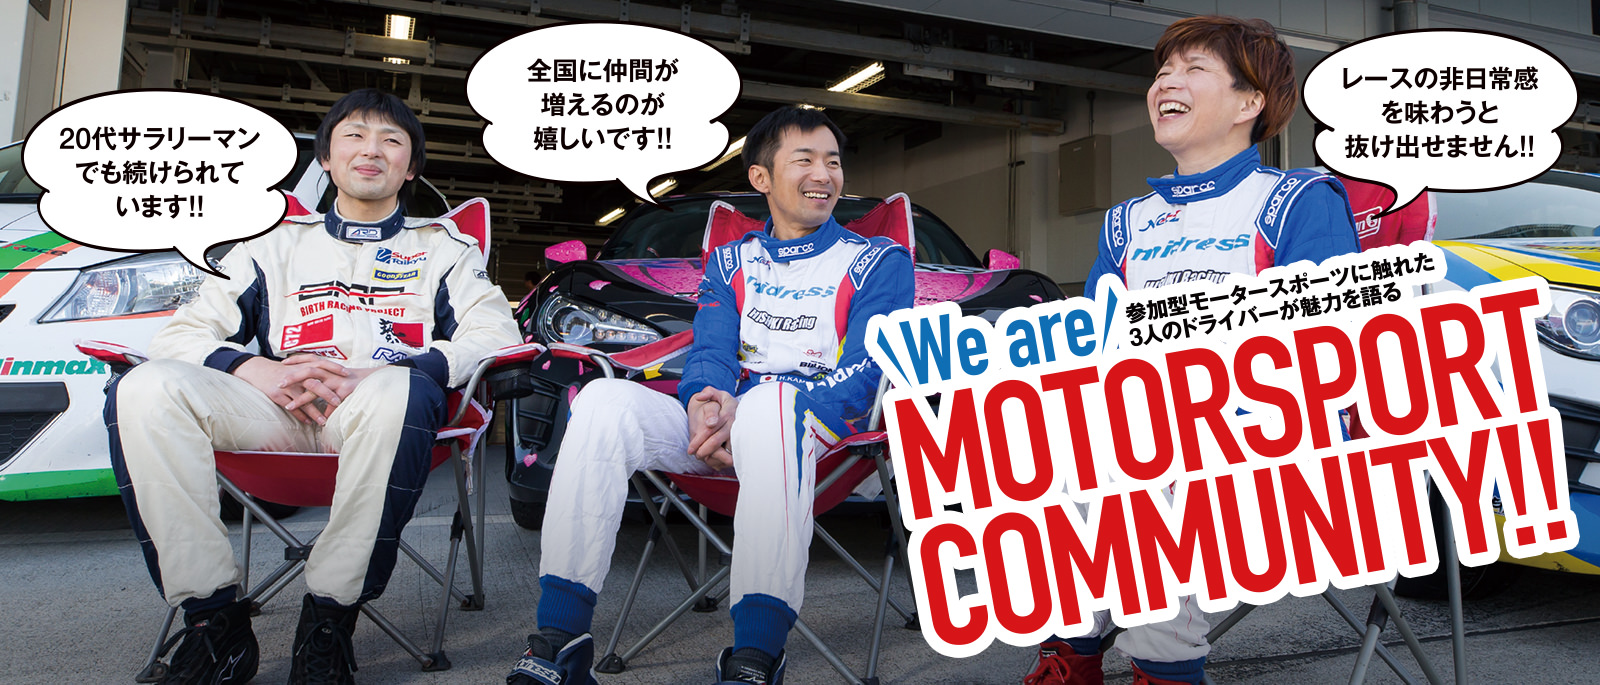 We are MOTORSPORT COMMUNITY!!